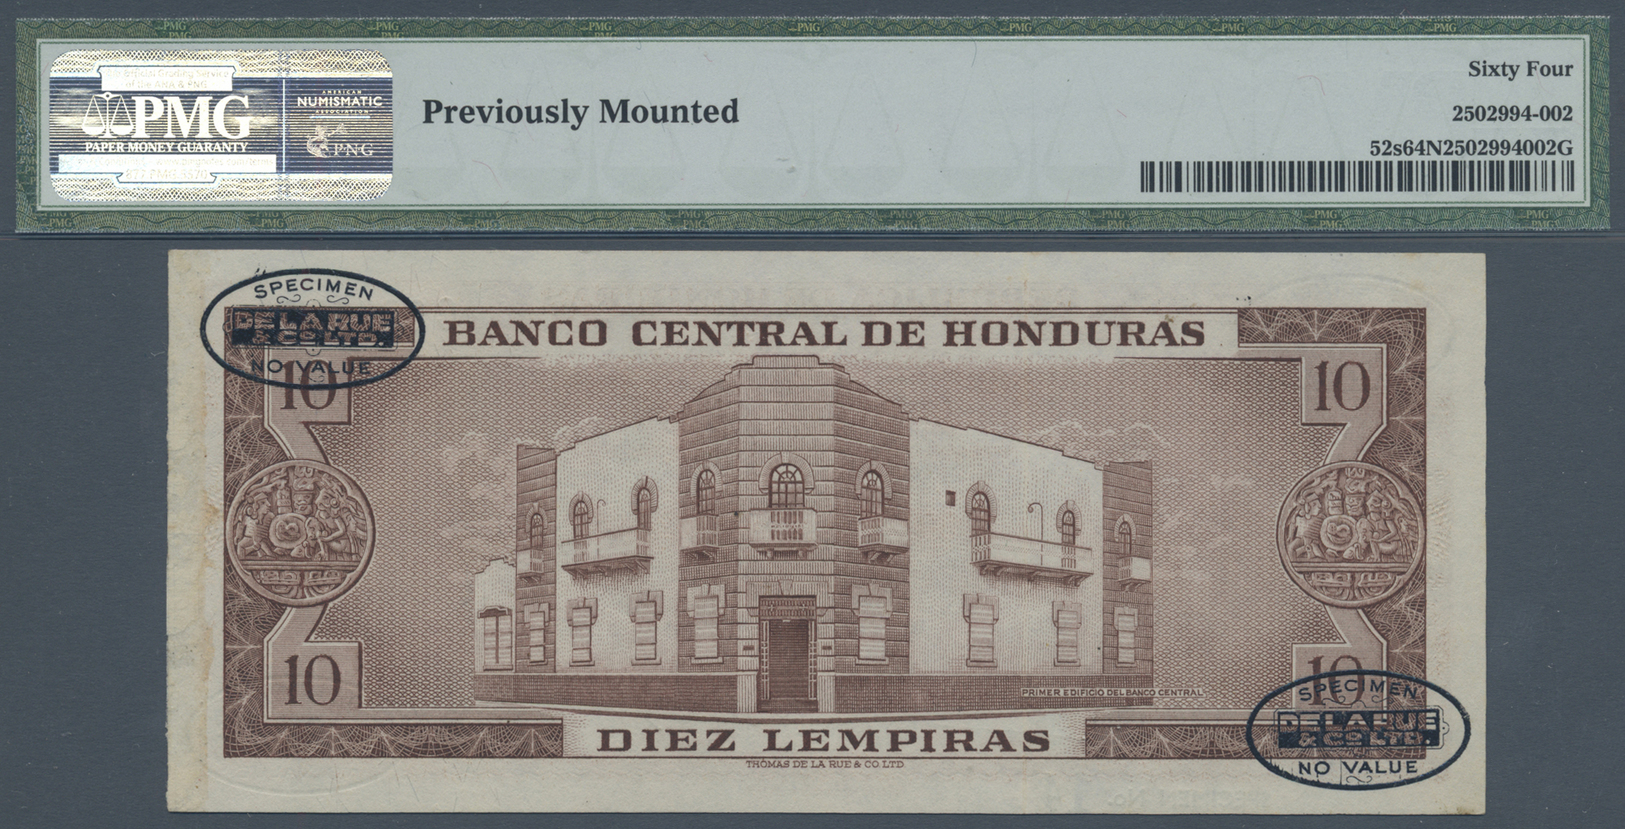 00990 Honduras: 10 Lempiras 1954 Specimen P. 52s, PMG Graded 64 Choice UNC Net. - Honduras